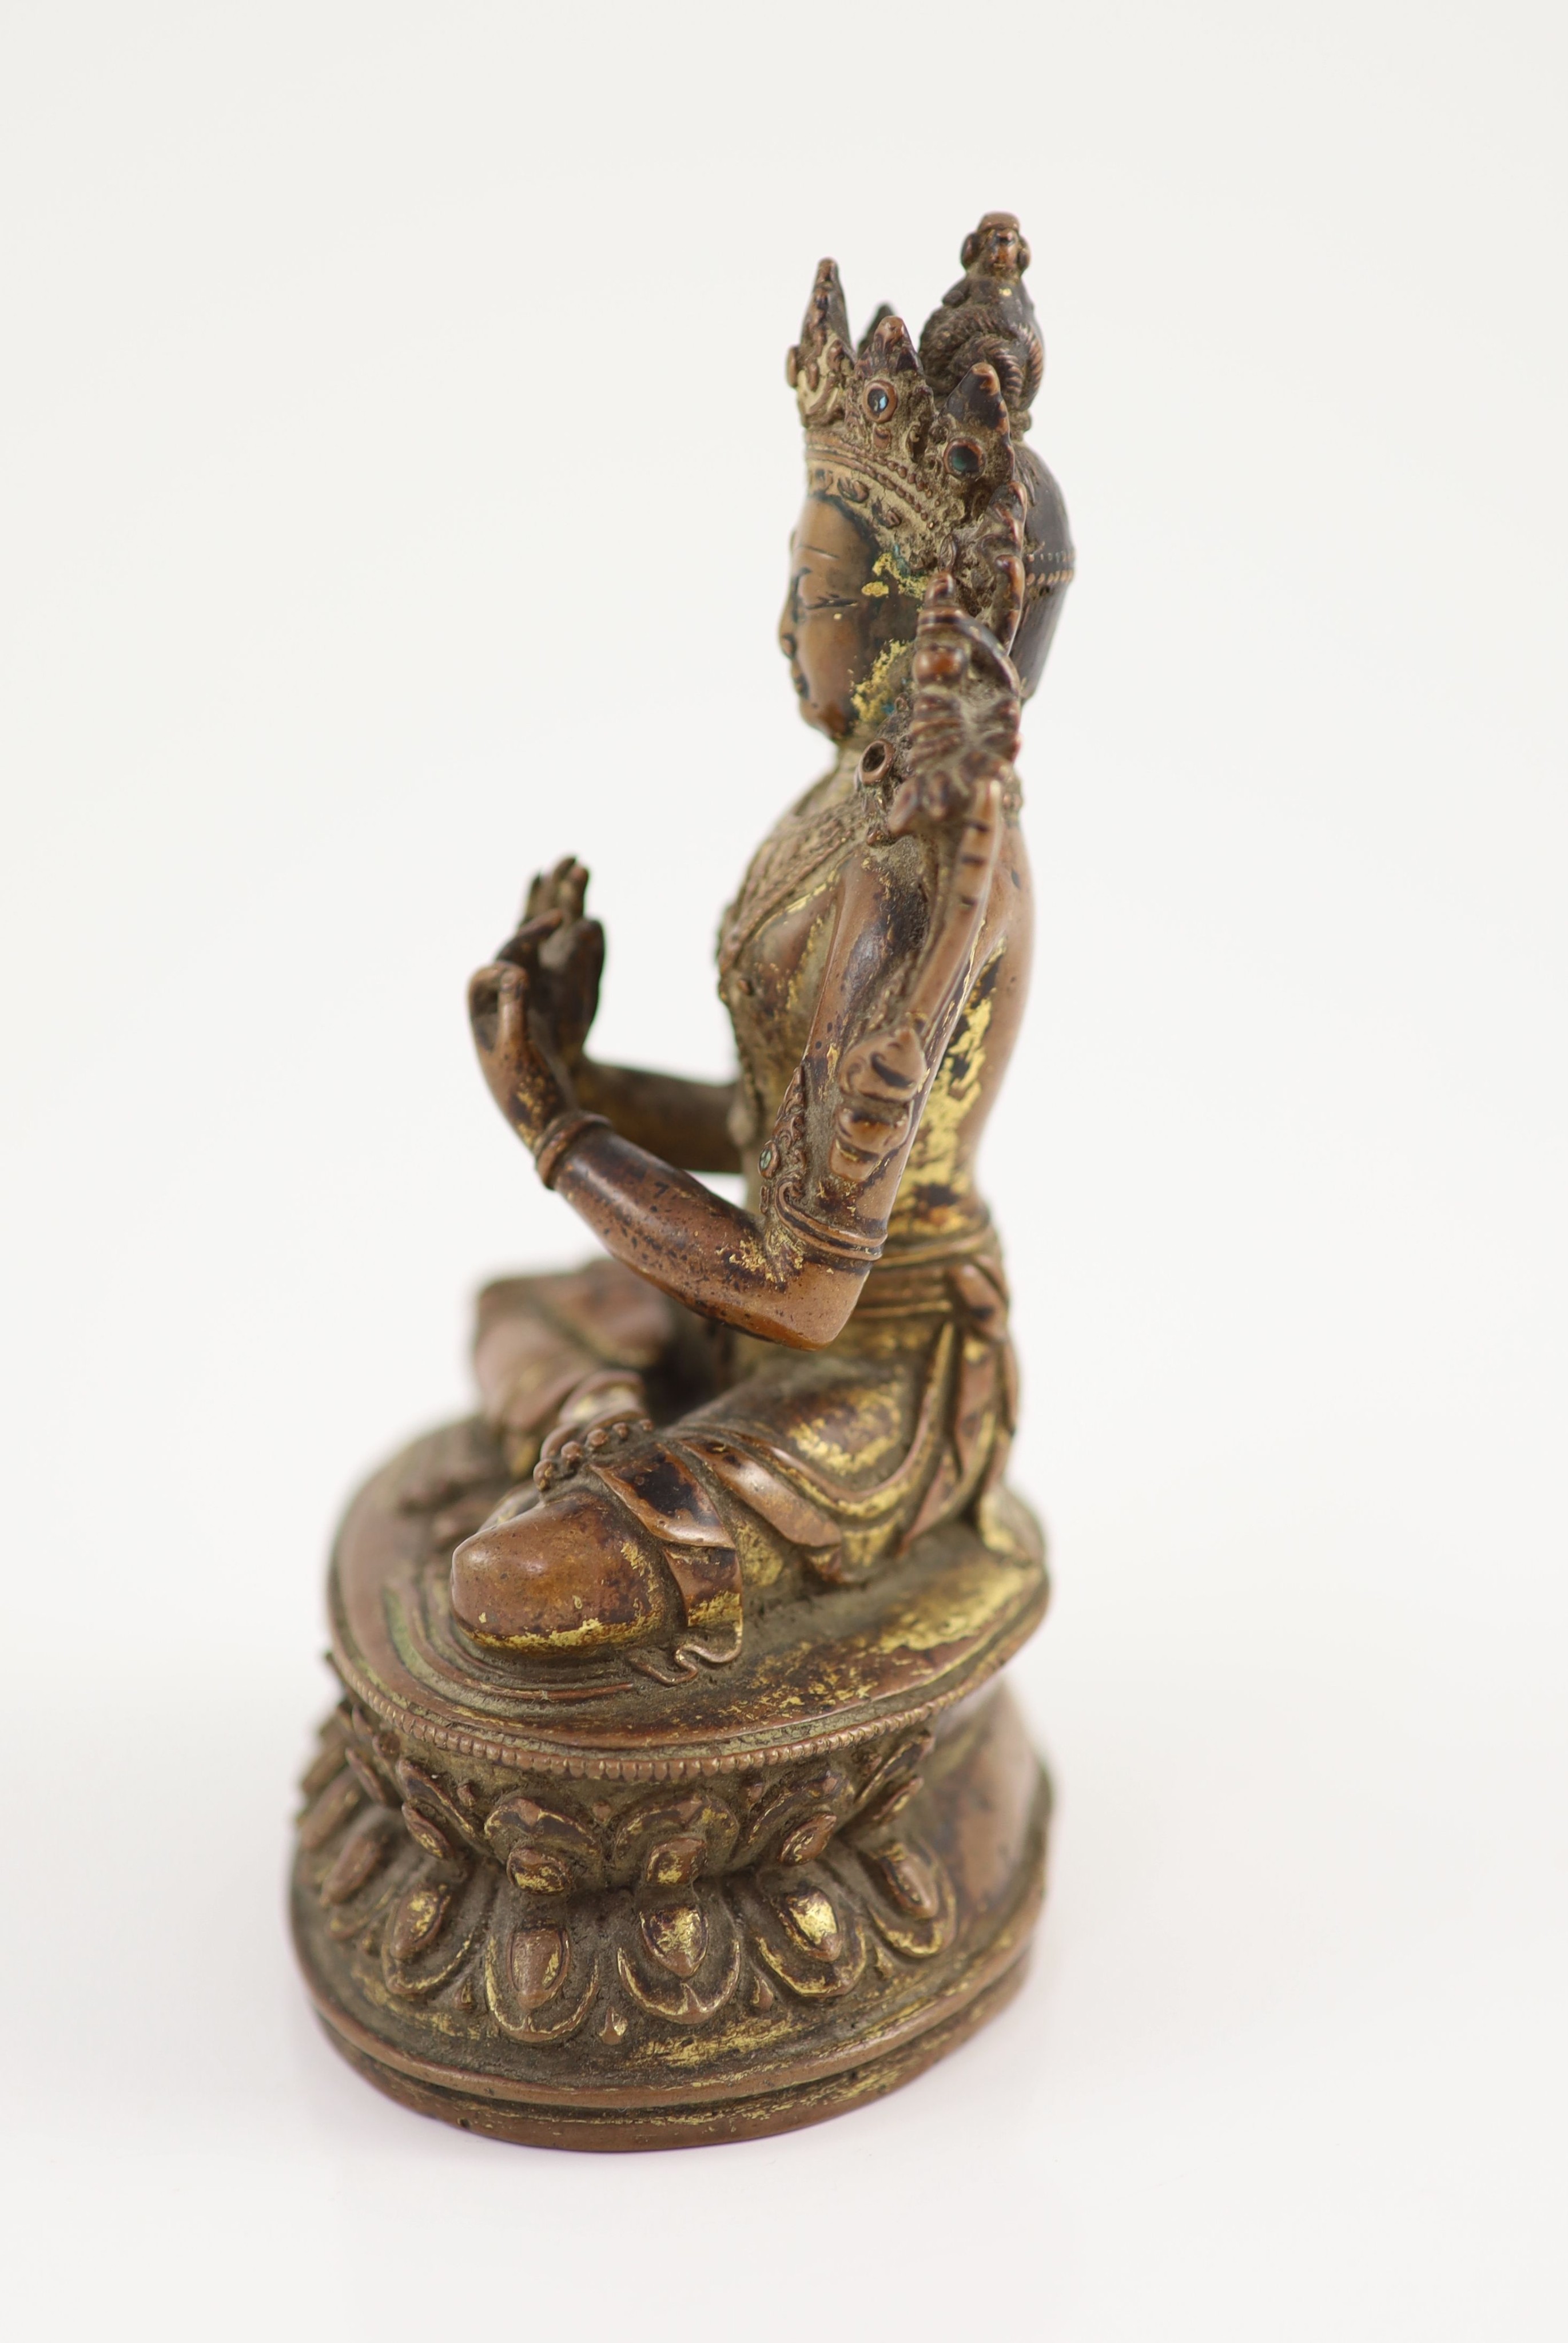 A Tibetan gilt copper alloy figure of Maitreya, 17th/18th century, 14.8cm high, worn